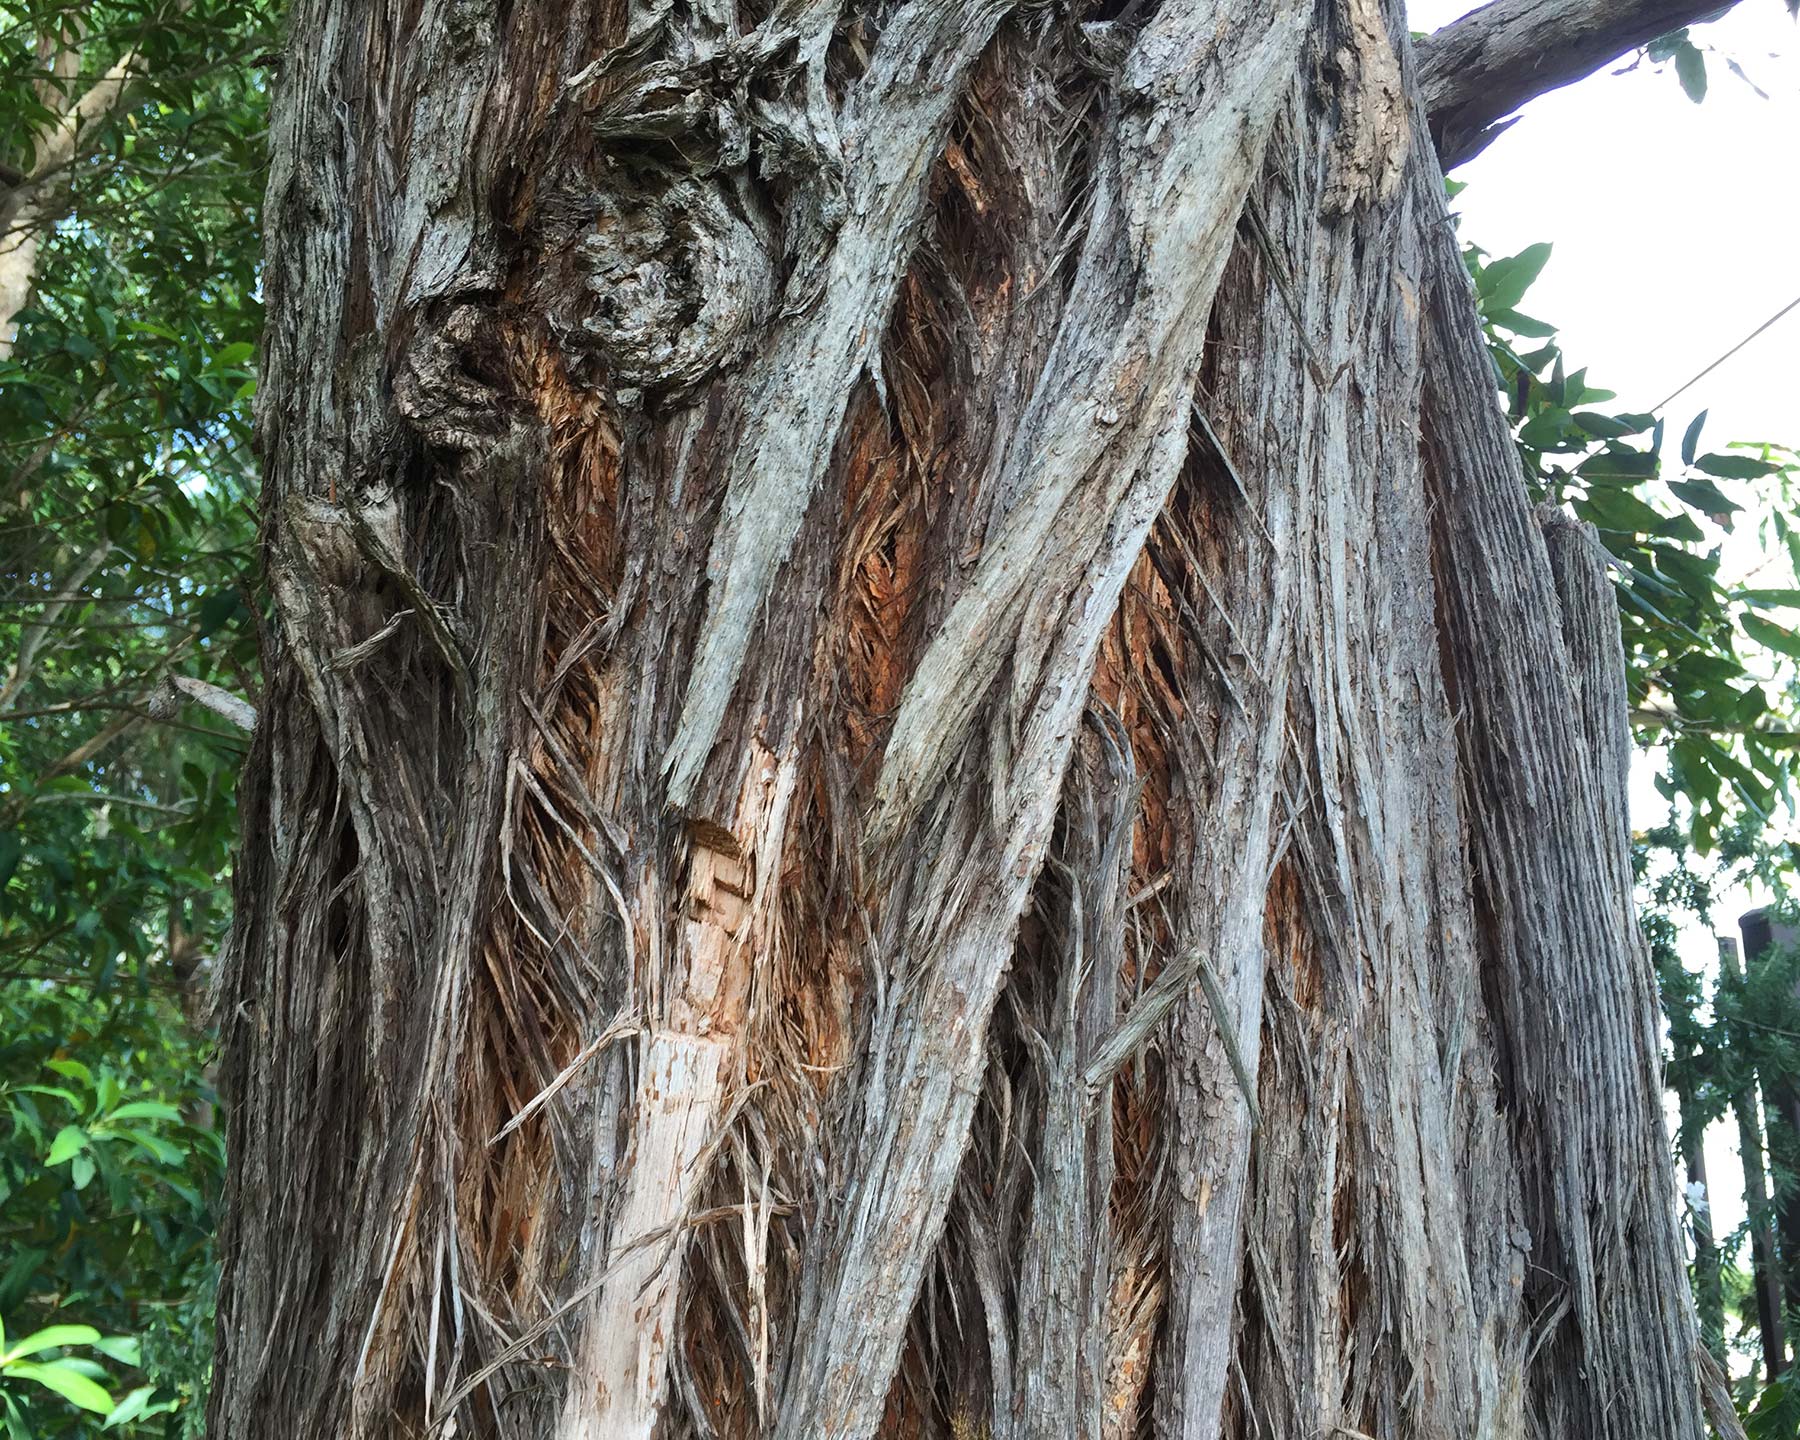 Syncarpia glomulifera - stringy bark with vertical furrows